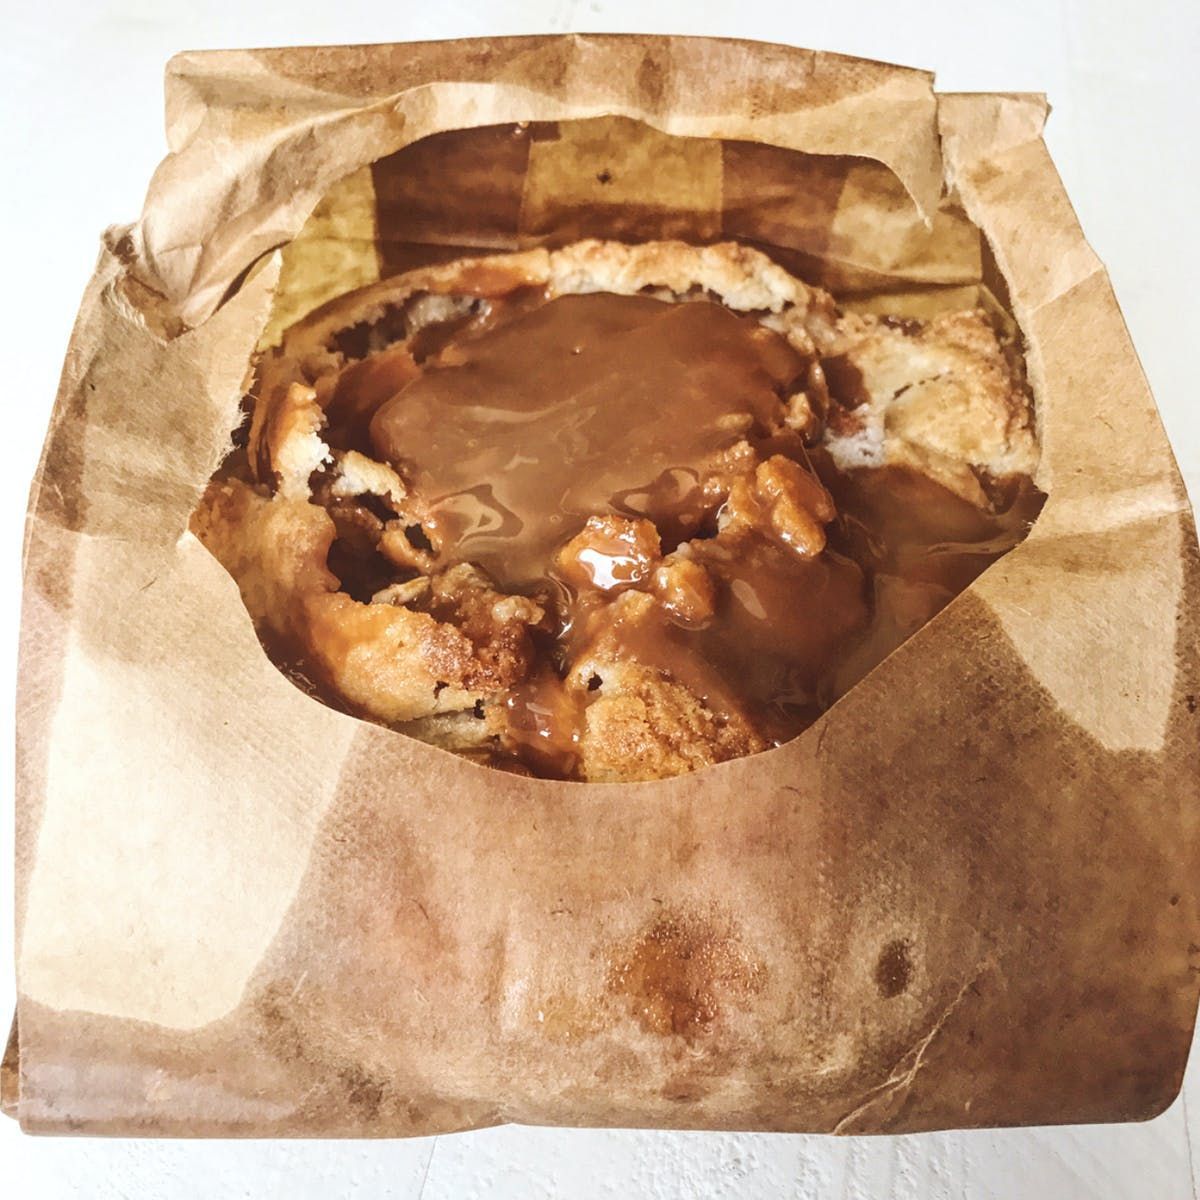 Apple pie inside a brown bag.